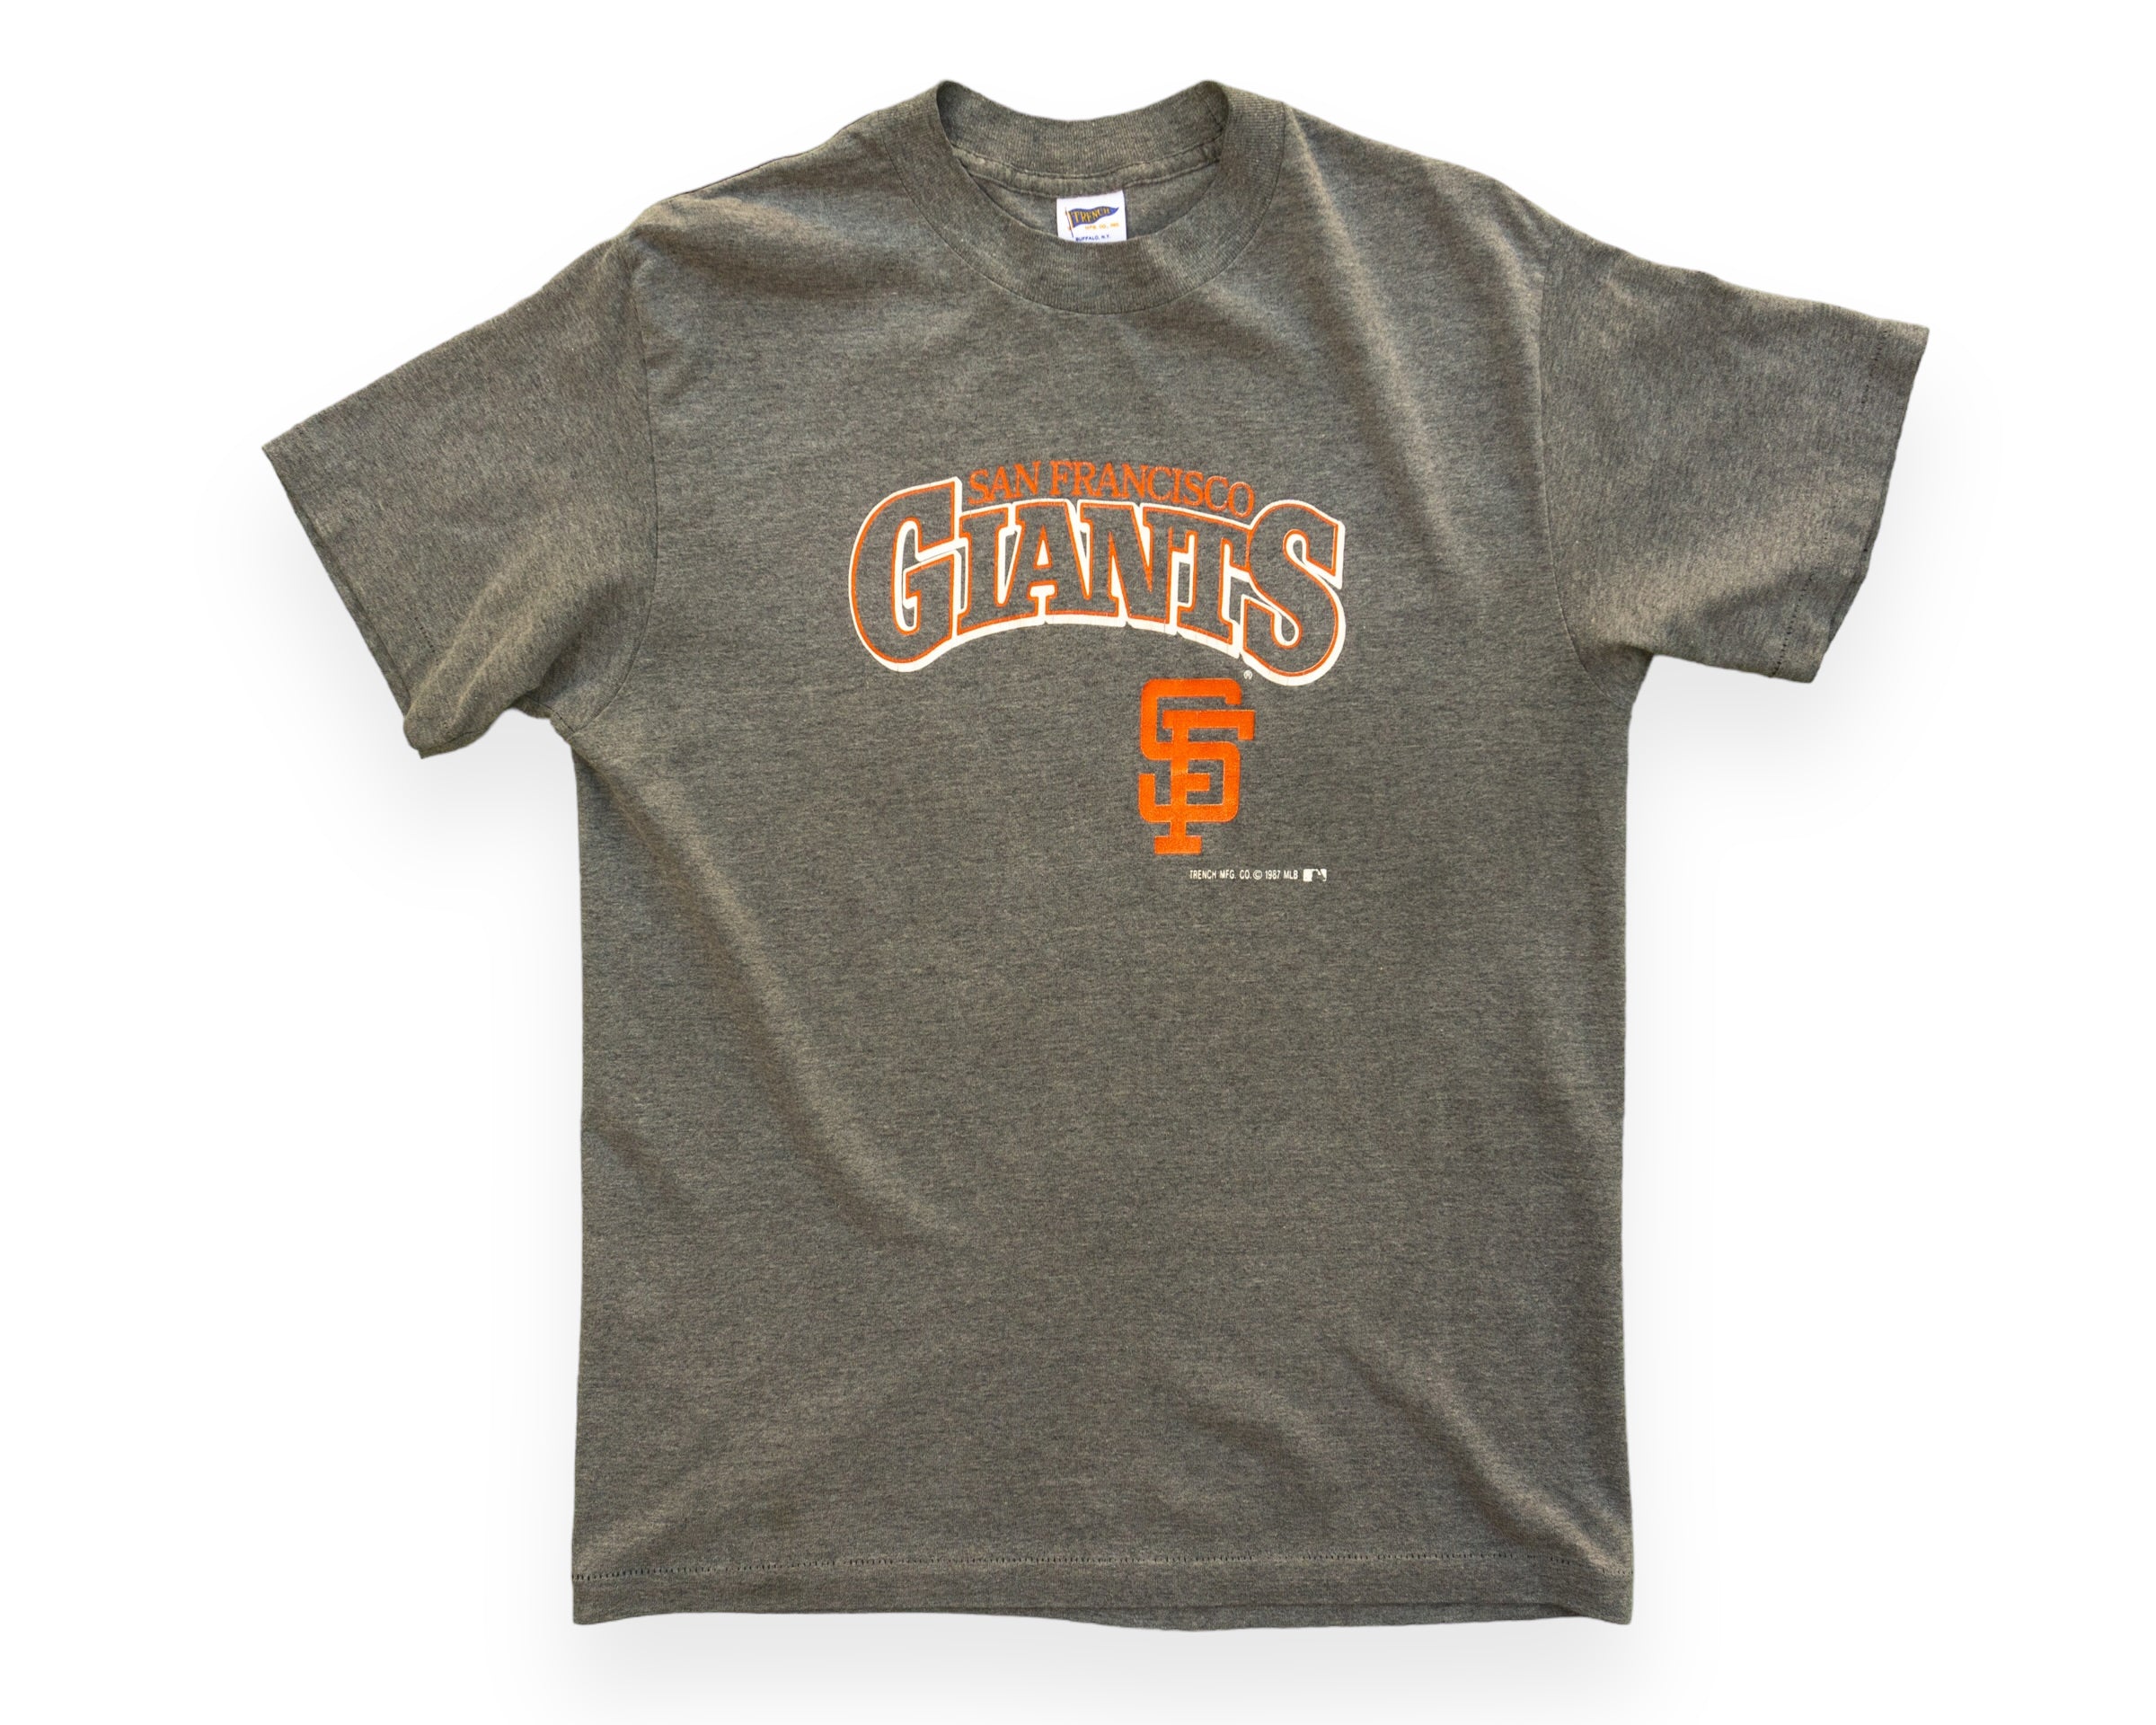 1987 vintage San Francisco Giants t-shirt.